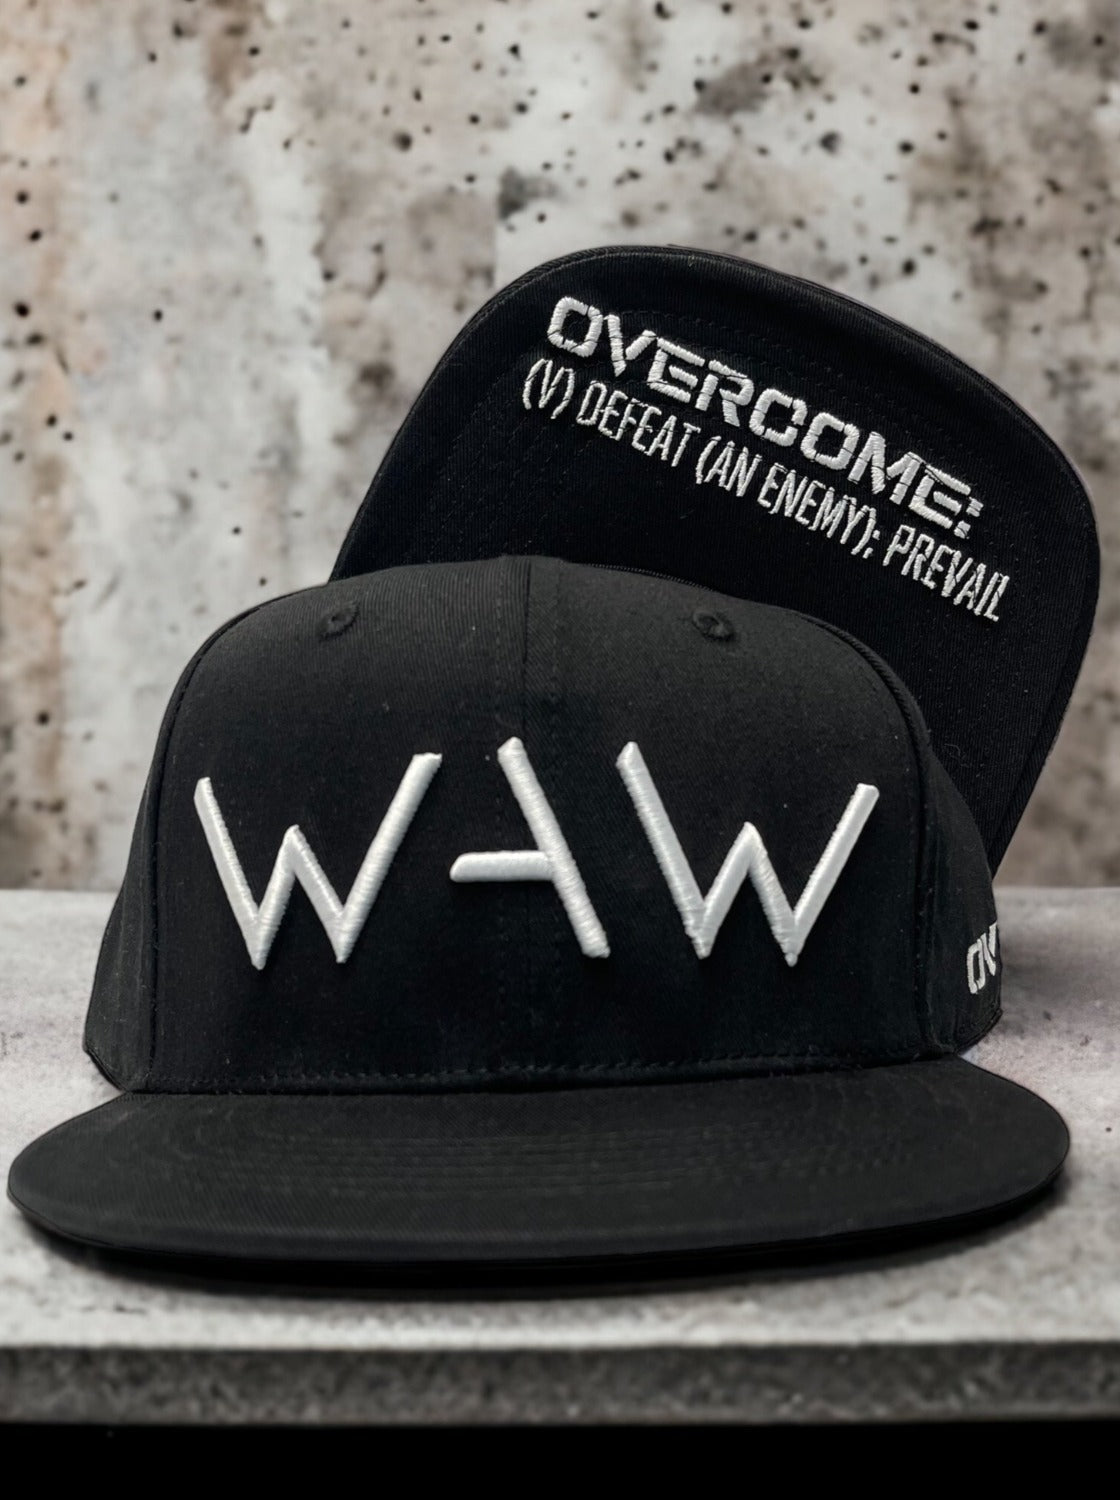 Black cap with WAW logo and Overcome message, WeAreWarriorsApparel.com